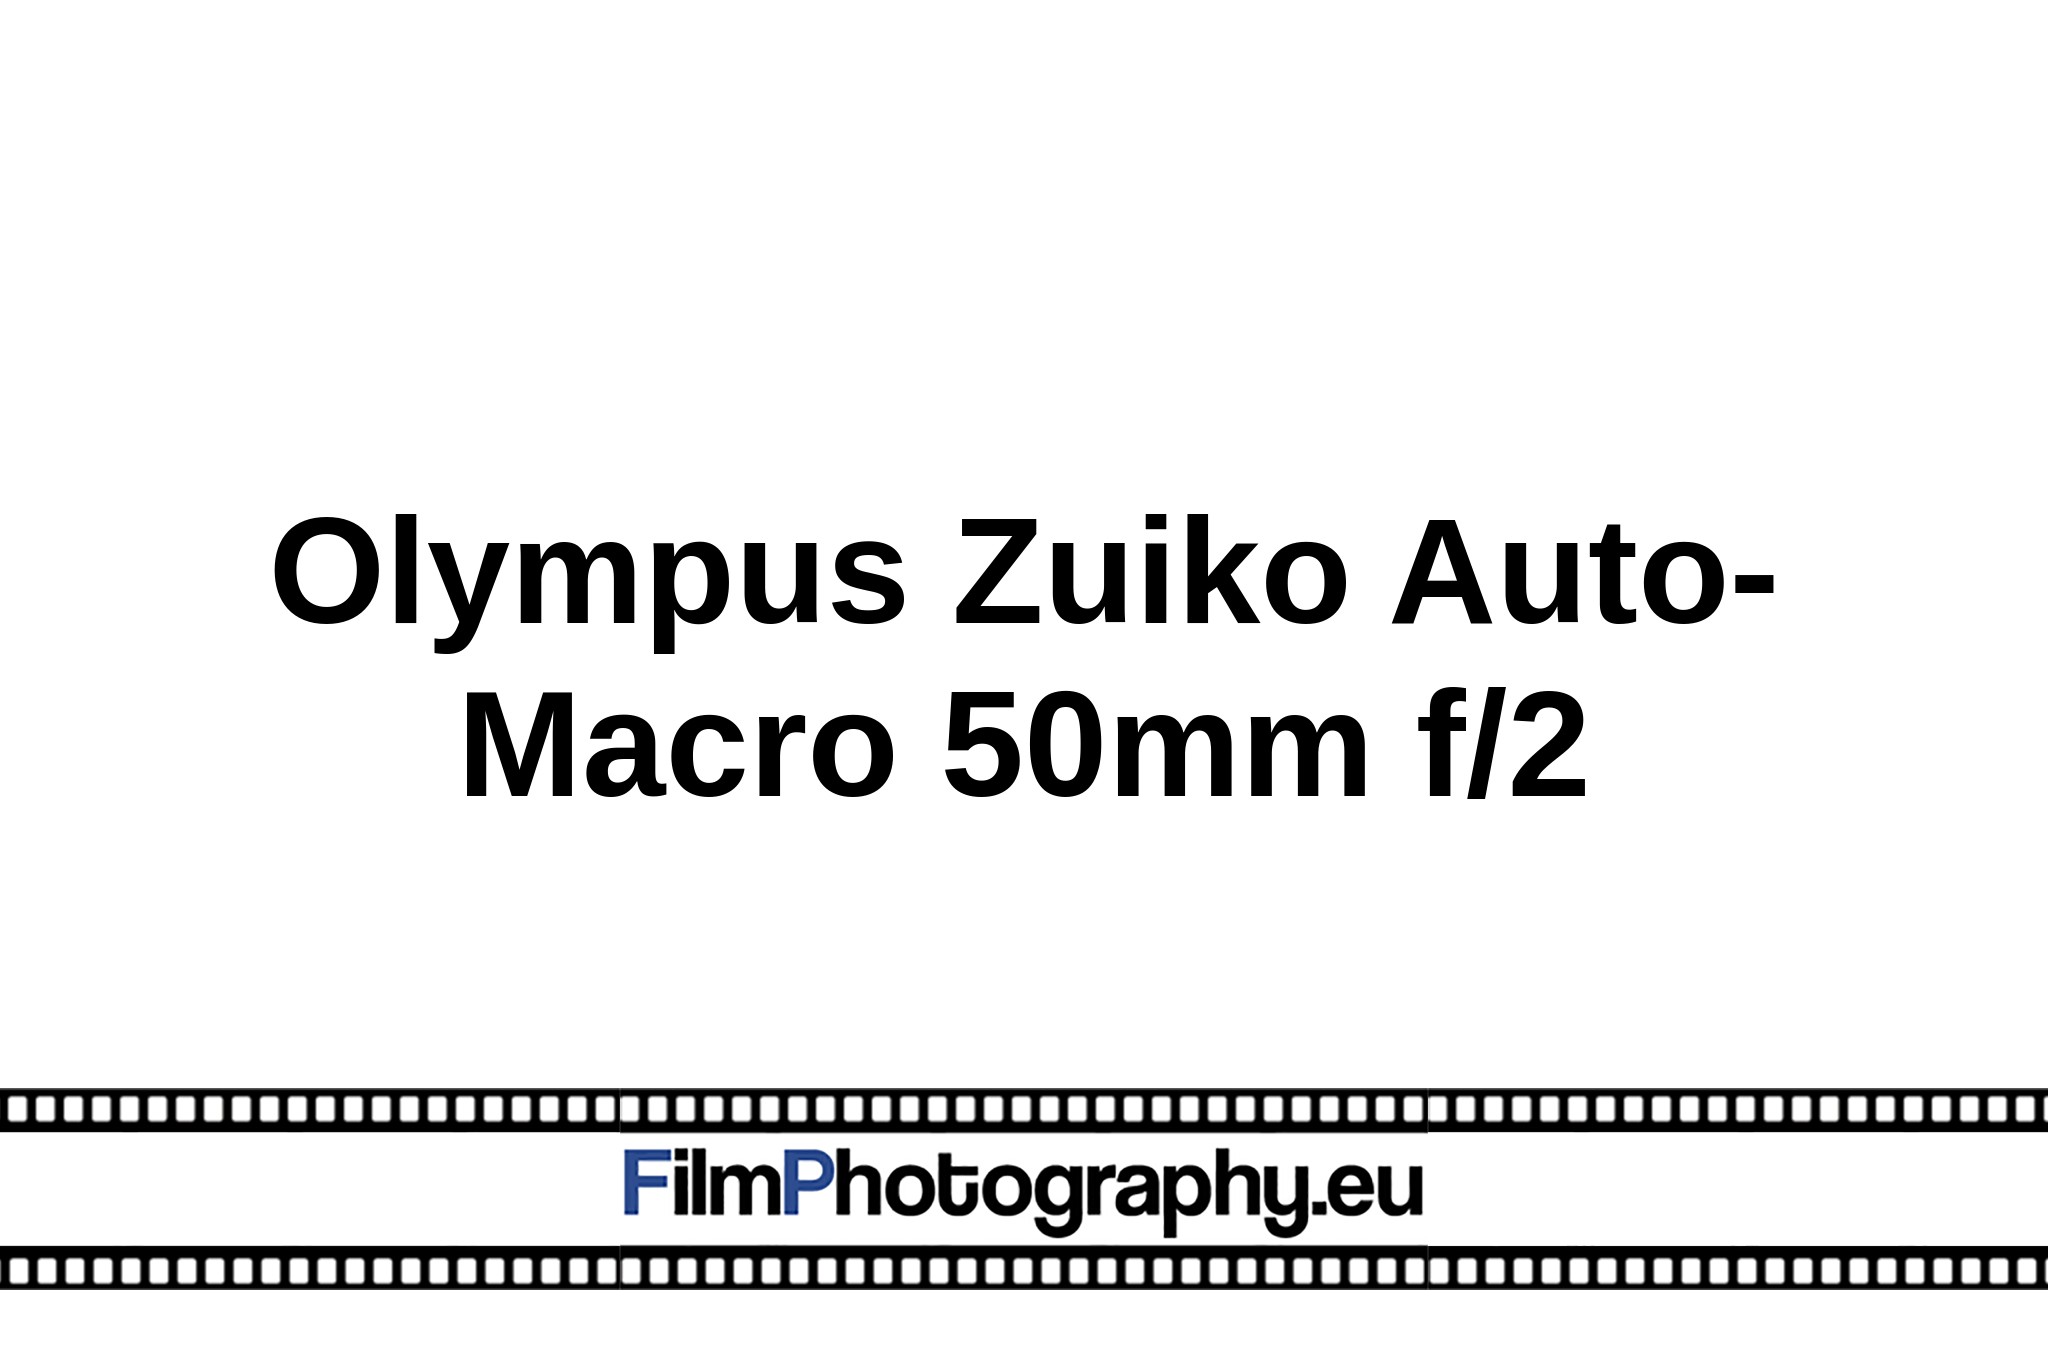 Olympus Zuiko Auto-Macro 50mm f/2 - Information on the lens